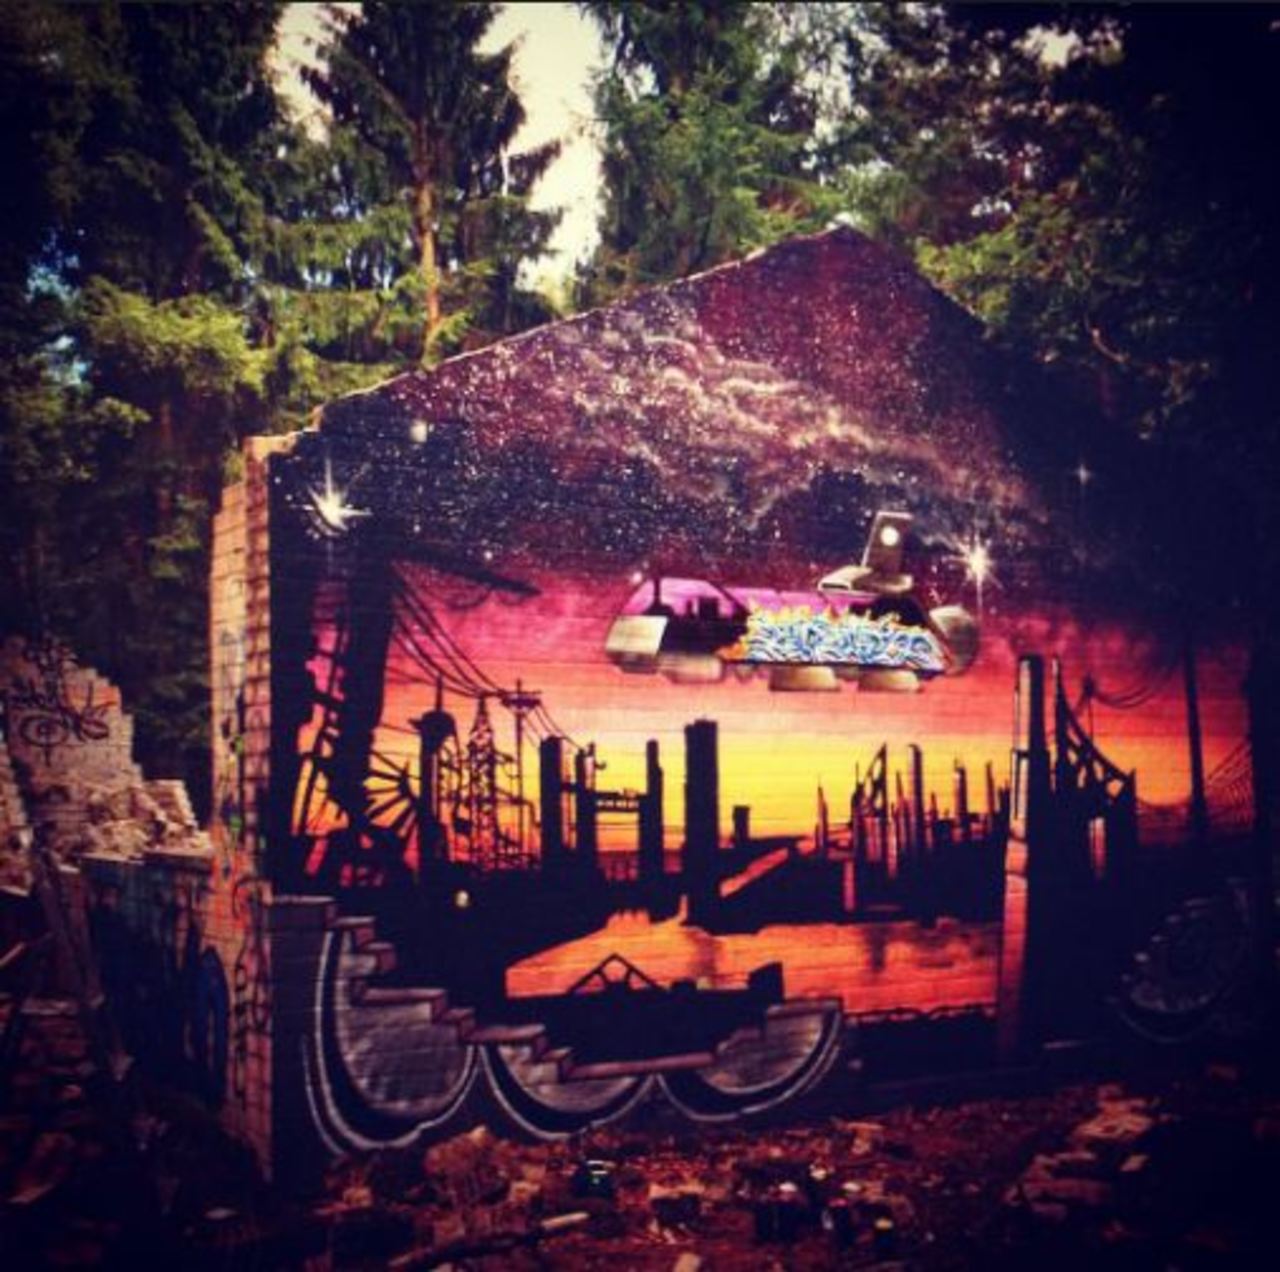 Colonising the Planet   •     #streetart #graffiti #art  . : https://t.co/gqf1kp6Wfe